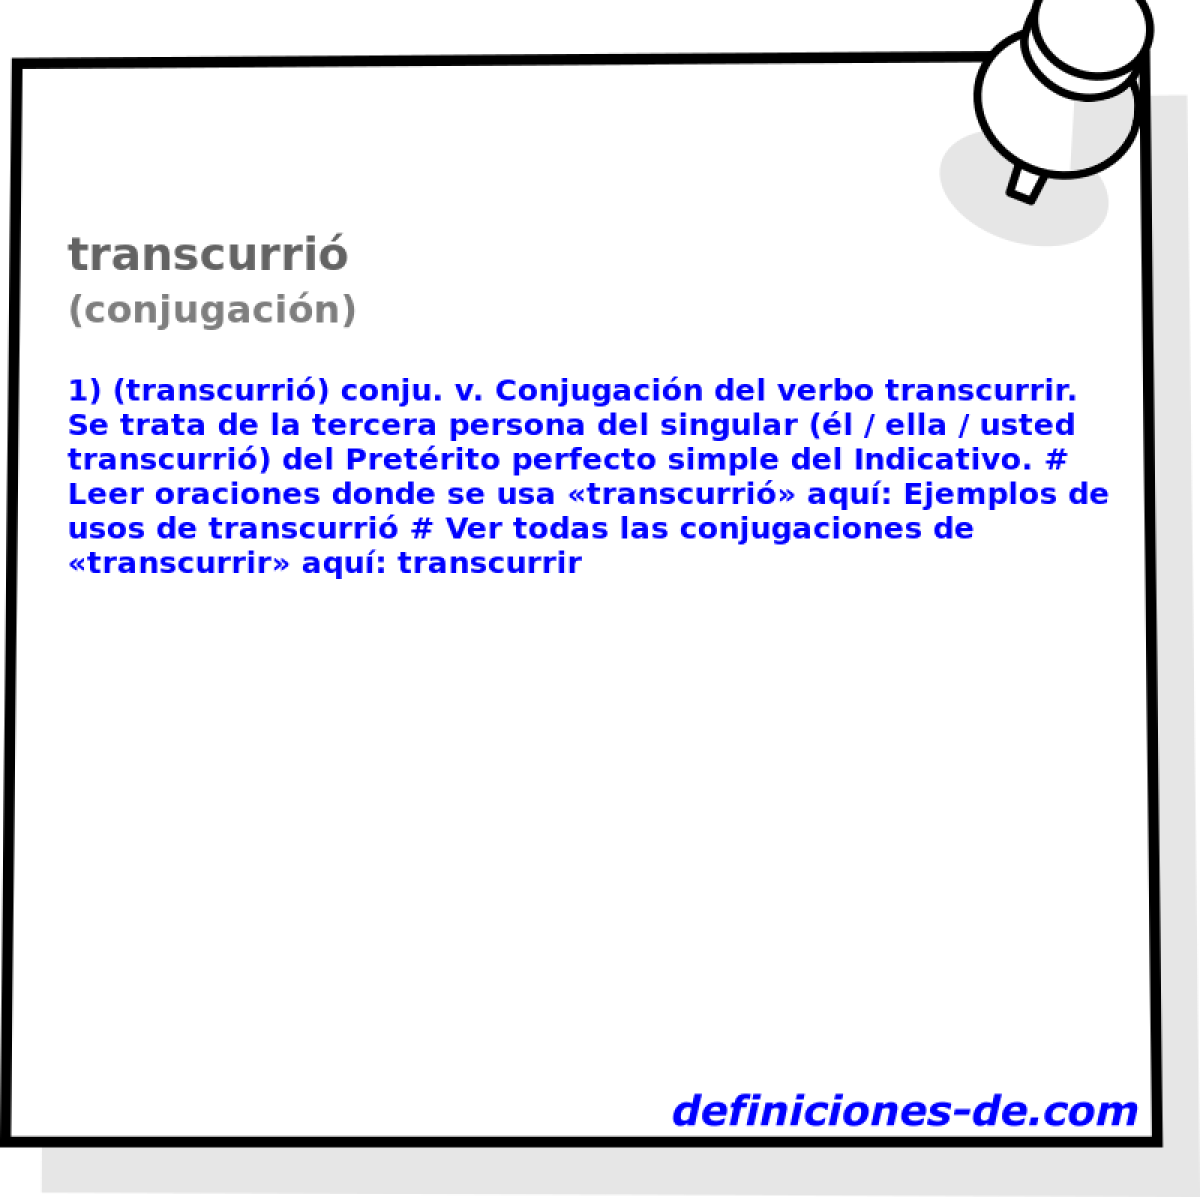 transcurri (conjugacin)